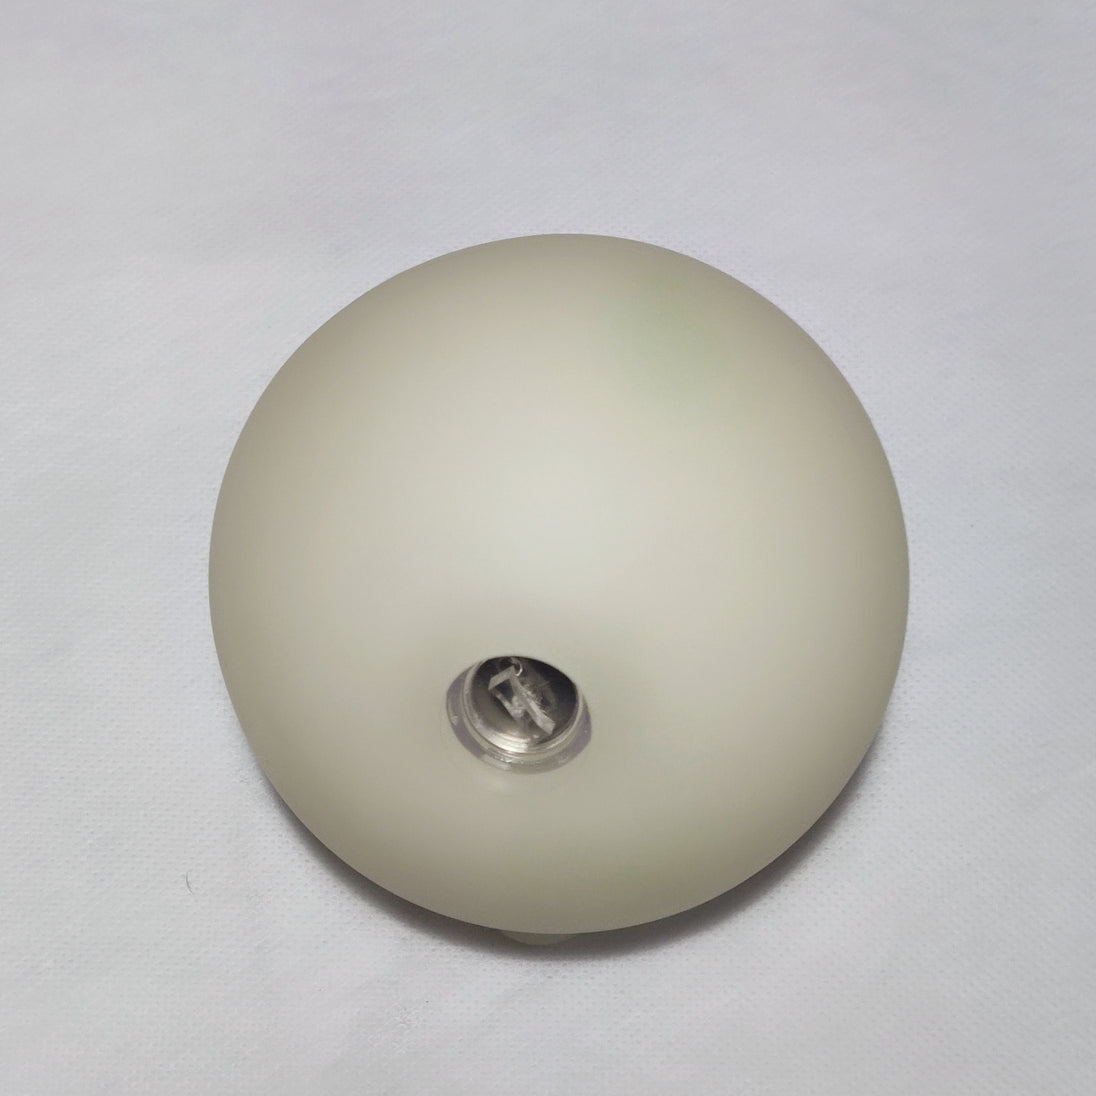 Oddballs 95mm LED CONTACT BALL - Multi-function - Twist - Bargain basement - RRP £24.99